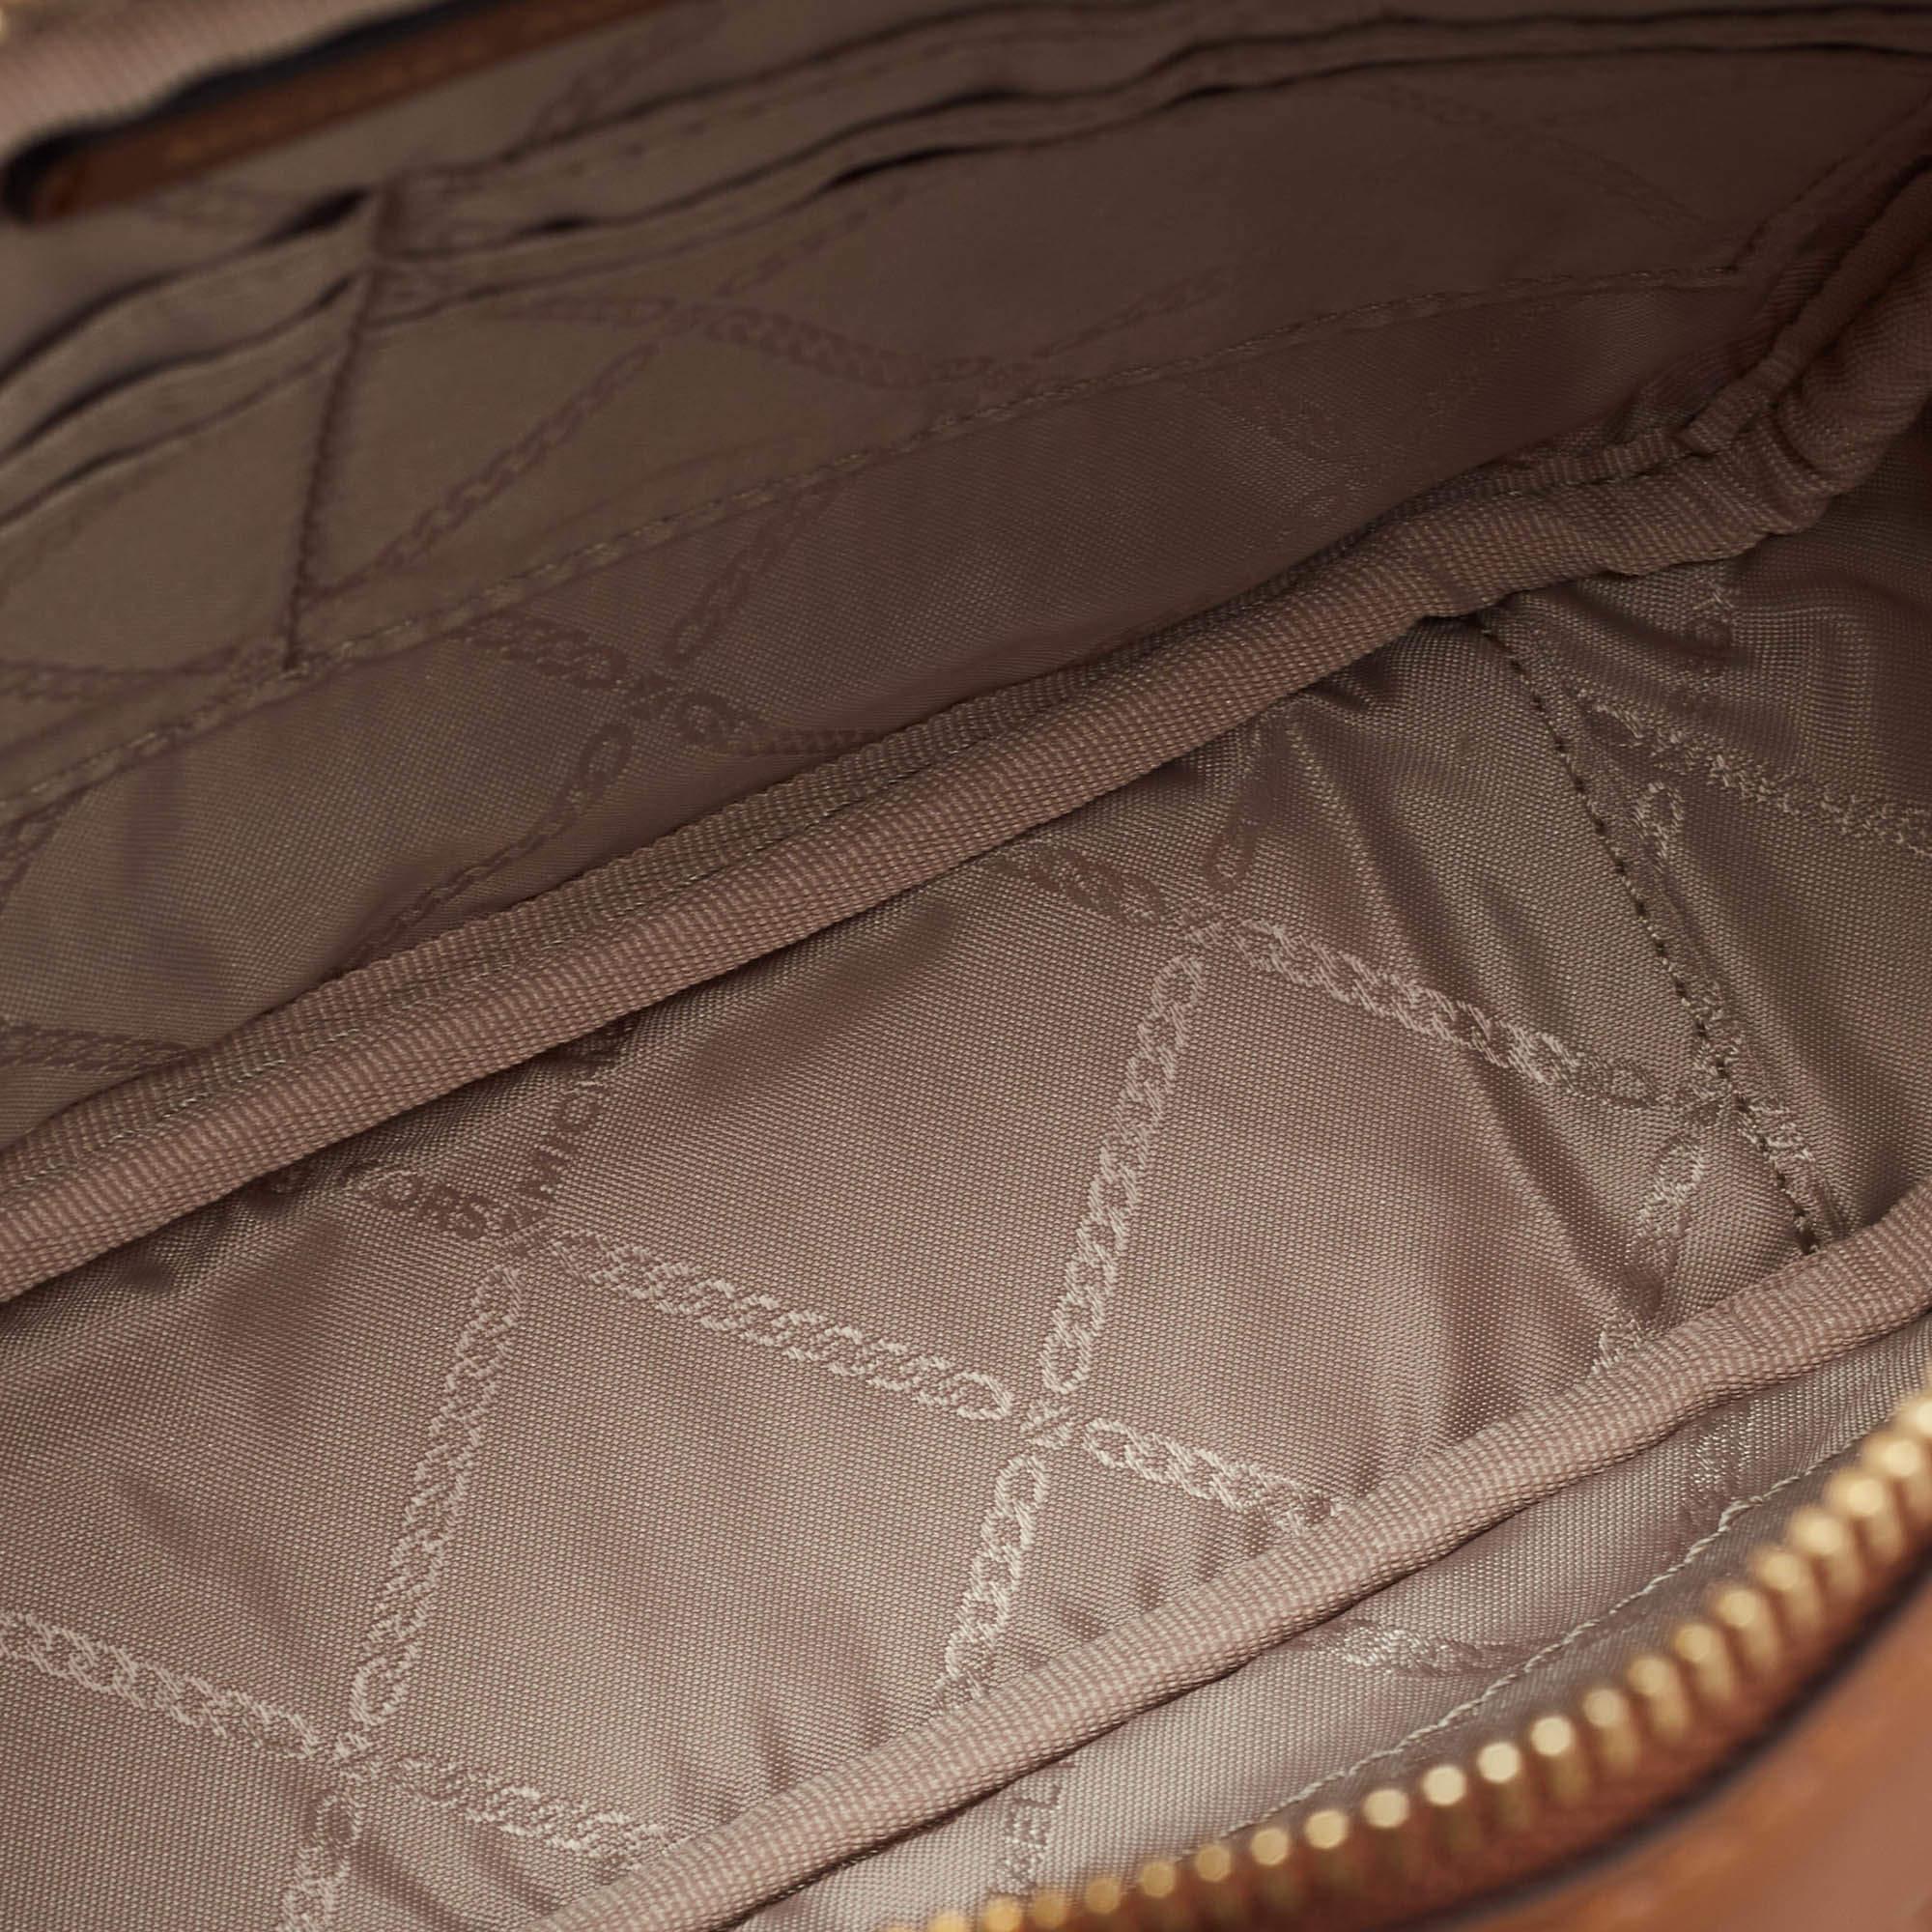 Michael Kors Beige/Tan Canvas And Leather Maeve Crossbody Bag 5